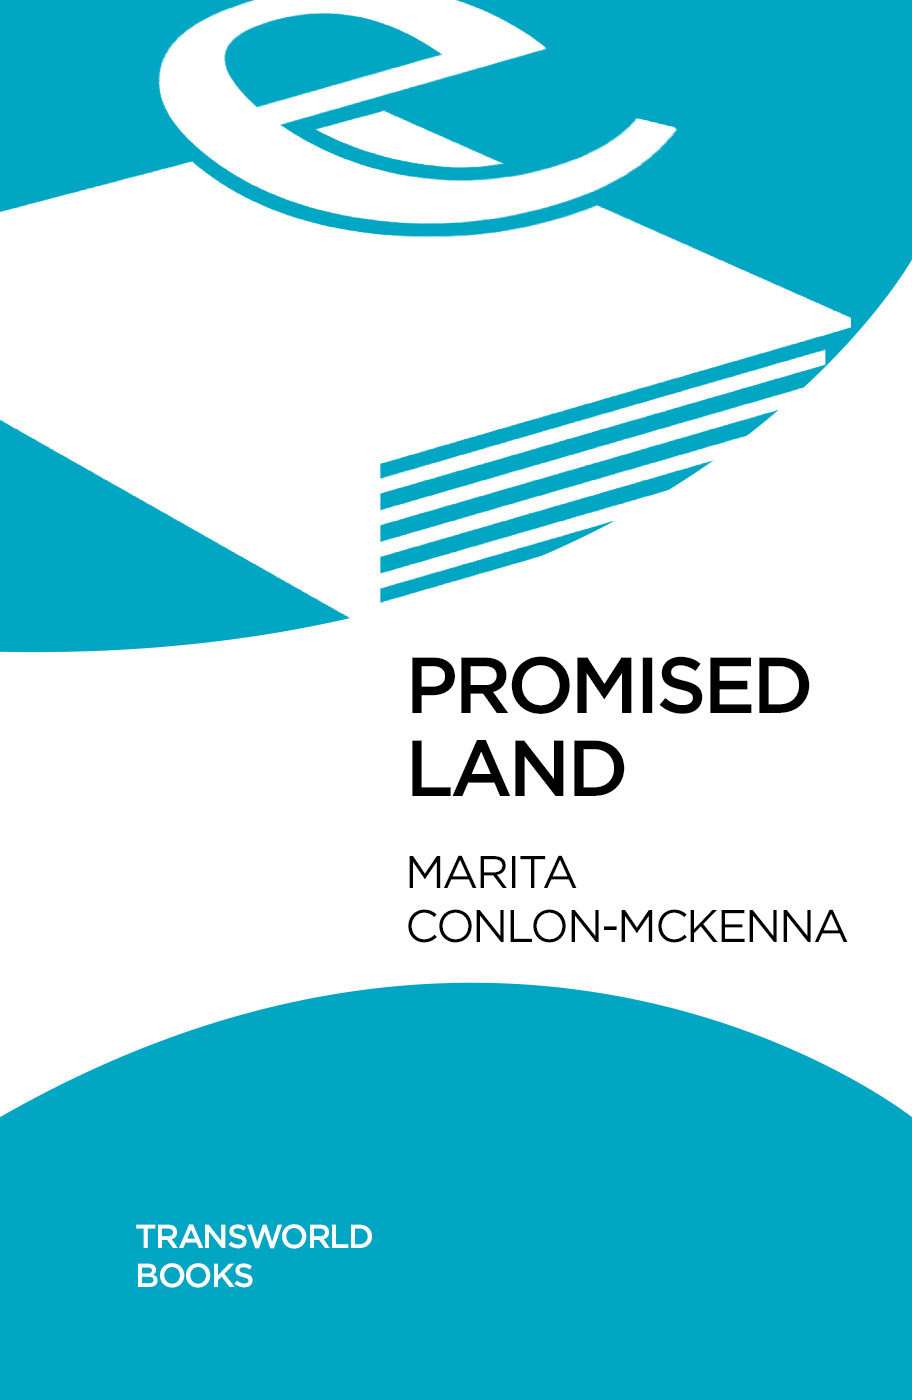 Promised Land by Marita Conlon-McKenna